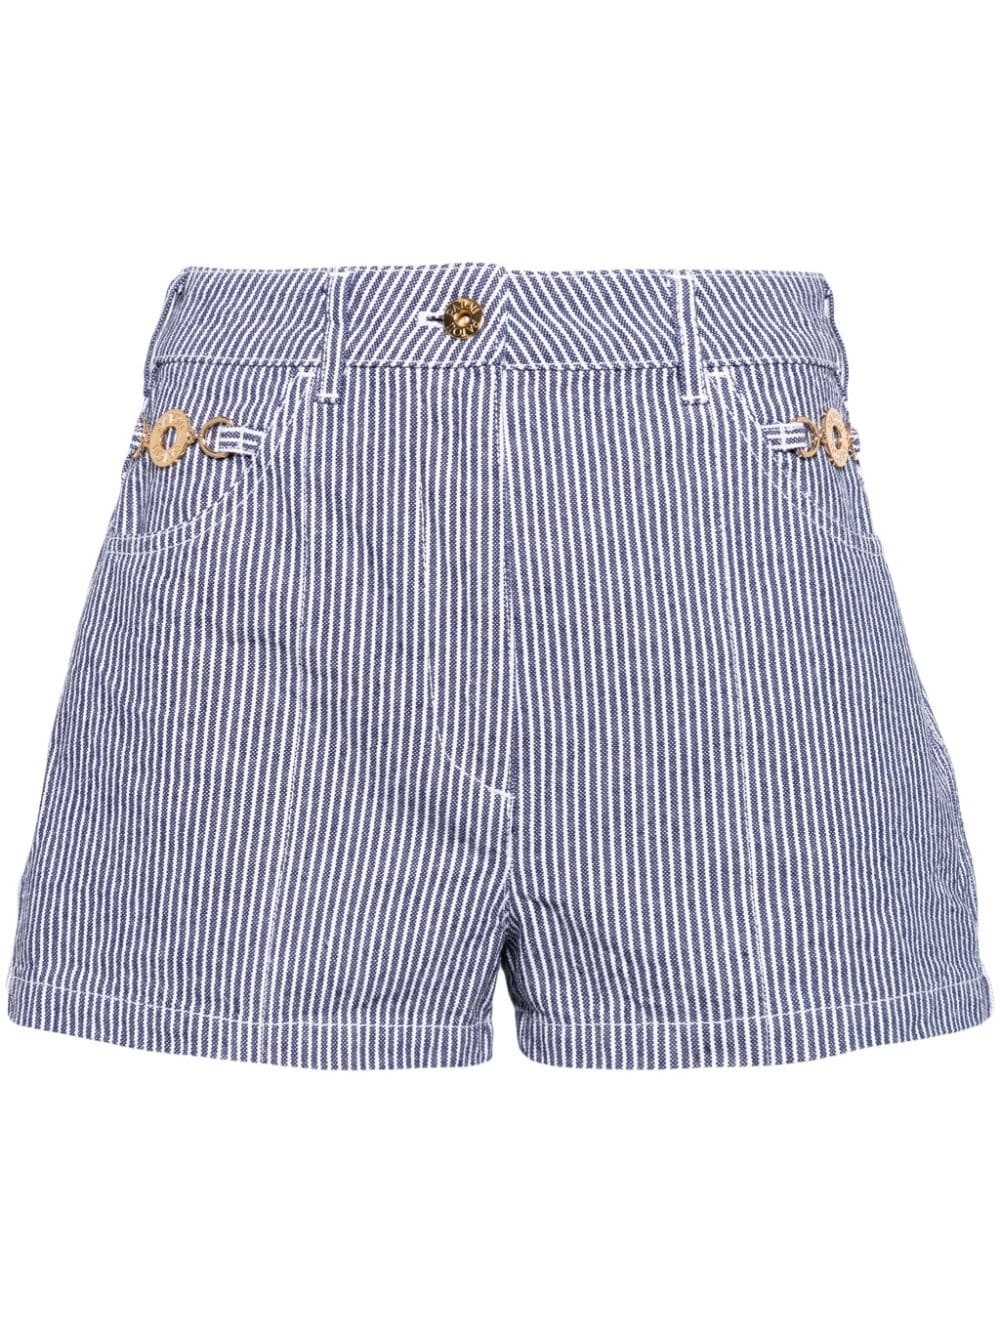 striped cotton shorts - 1